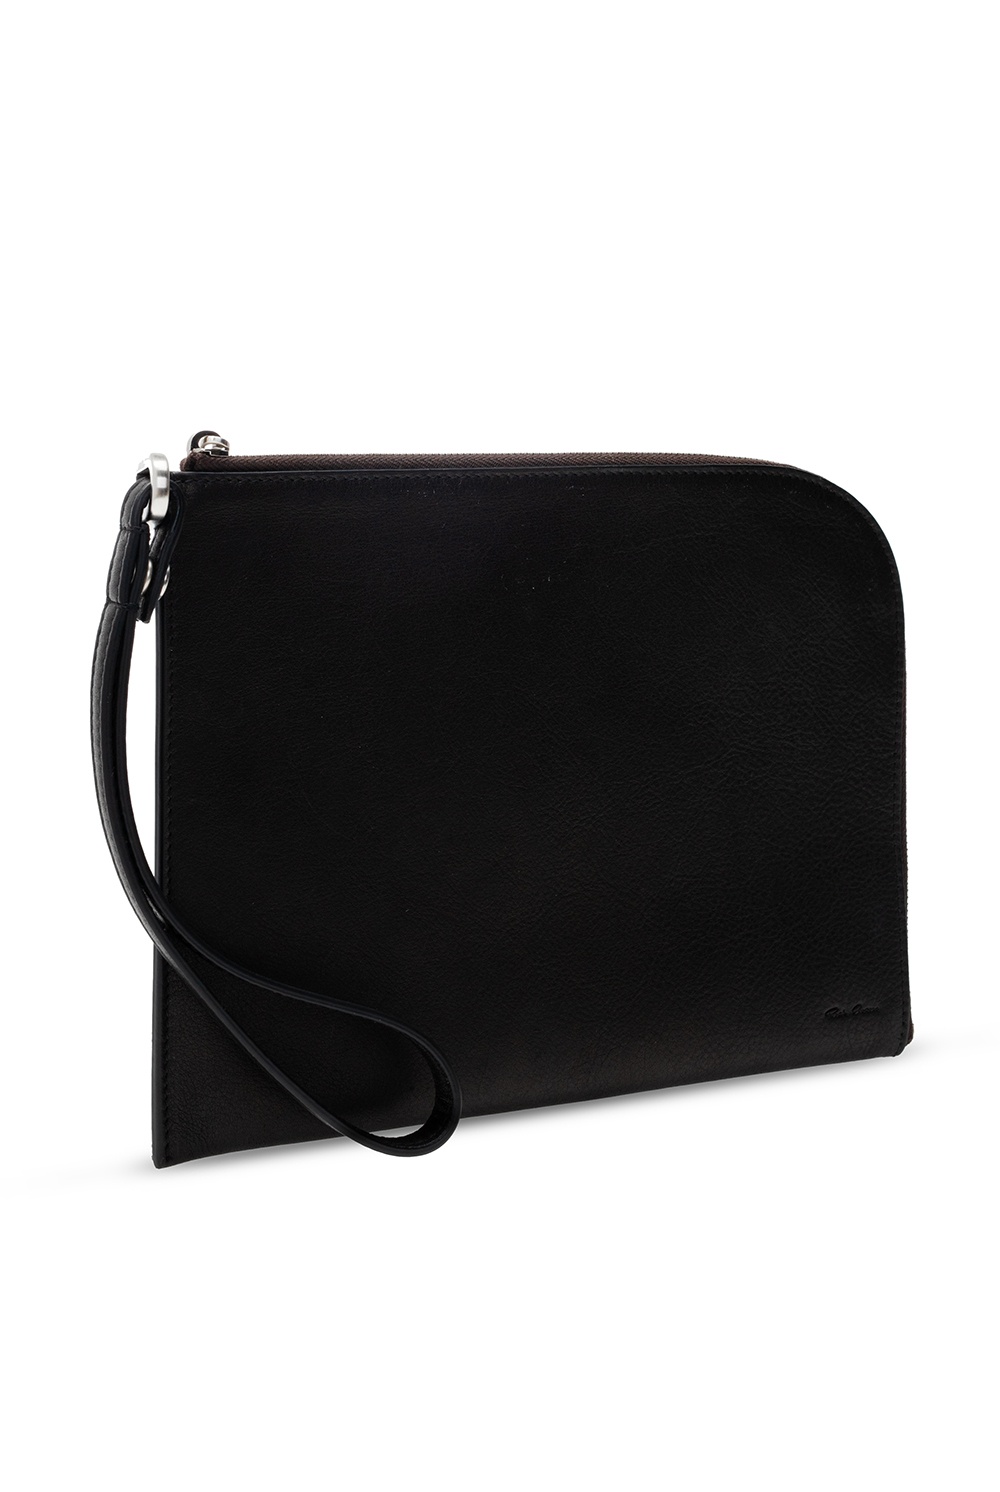 Rick Owens Leather handbag